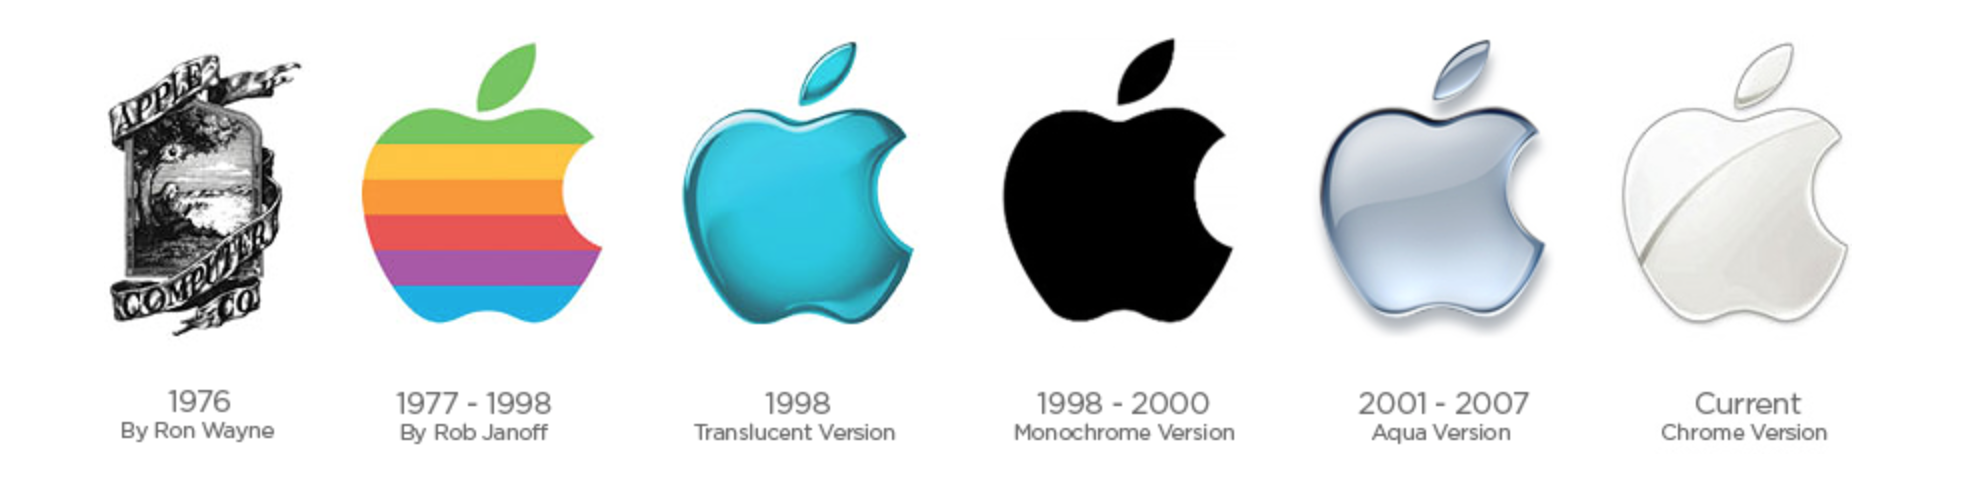 isaac newton apple logo